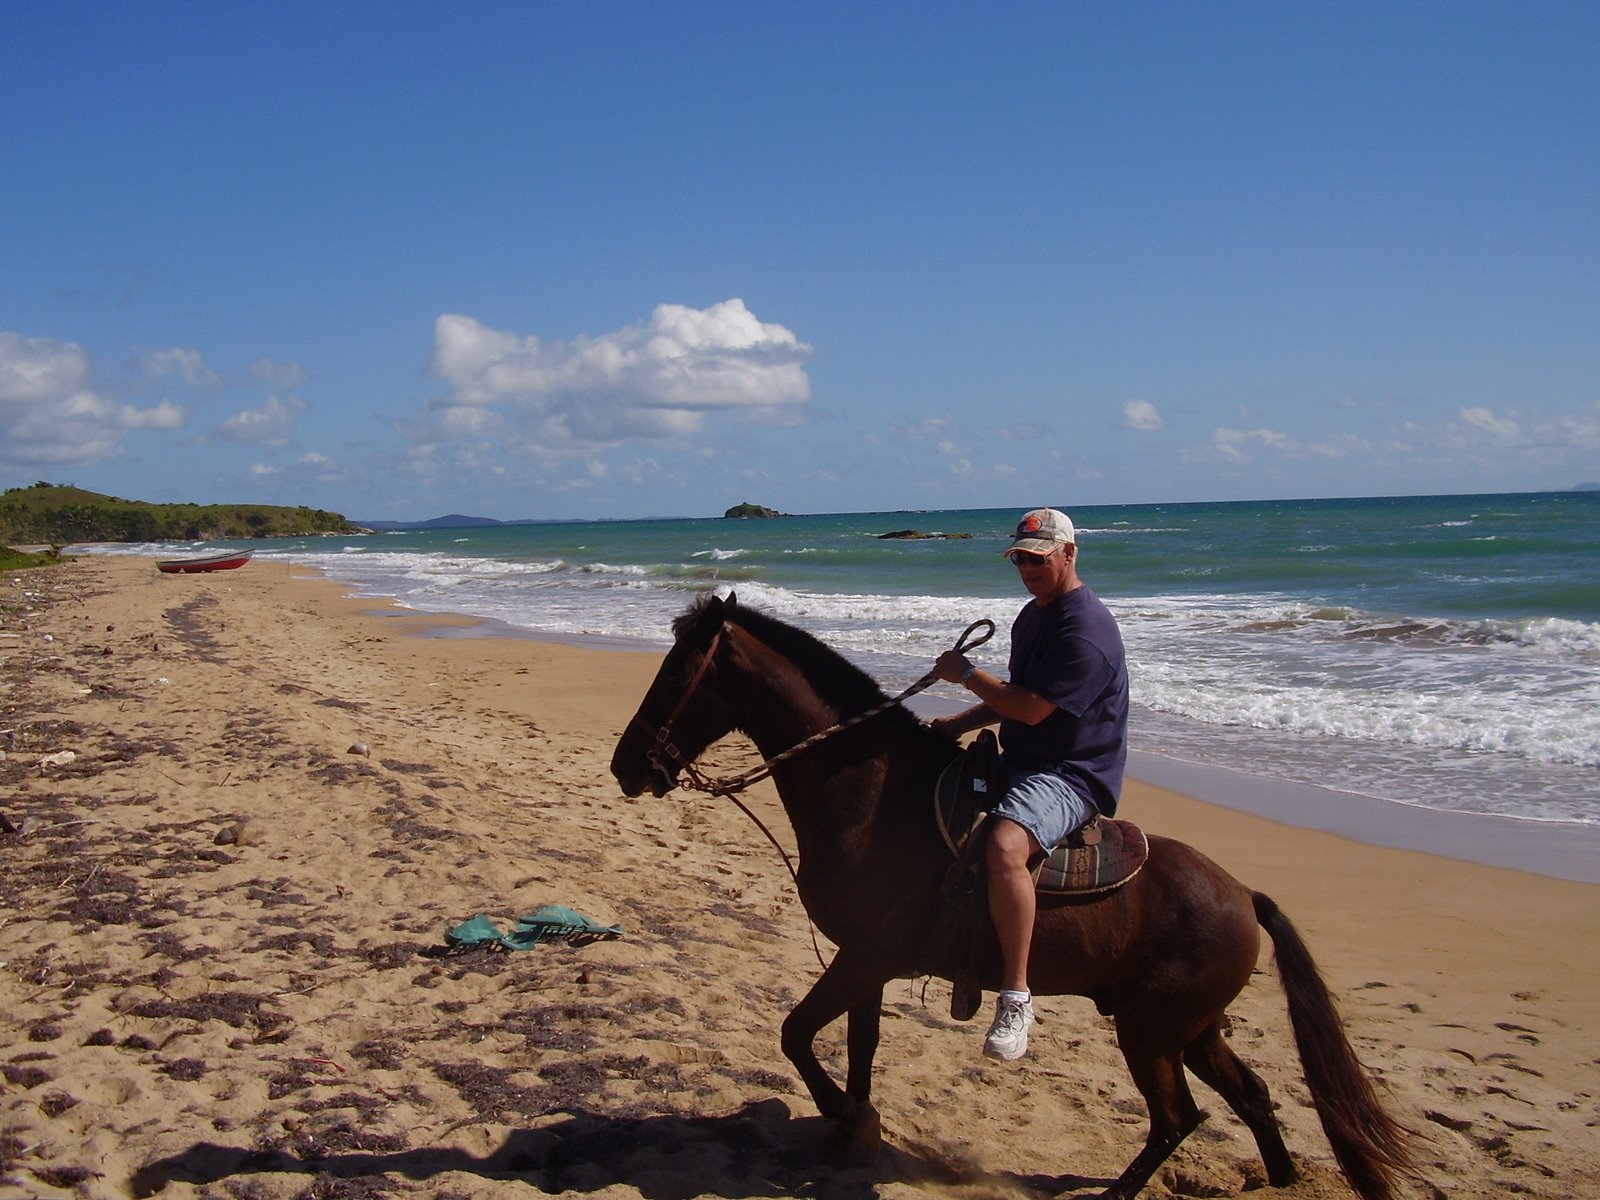 [Jim+riding+on+beach.JPG]